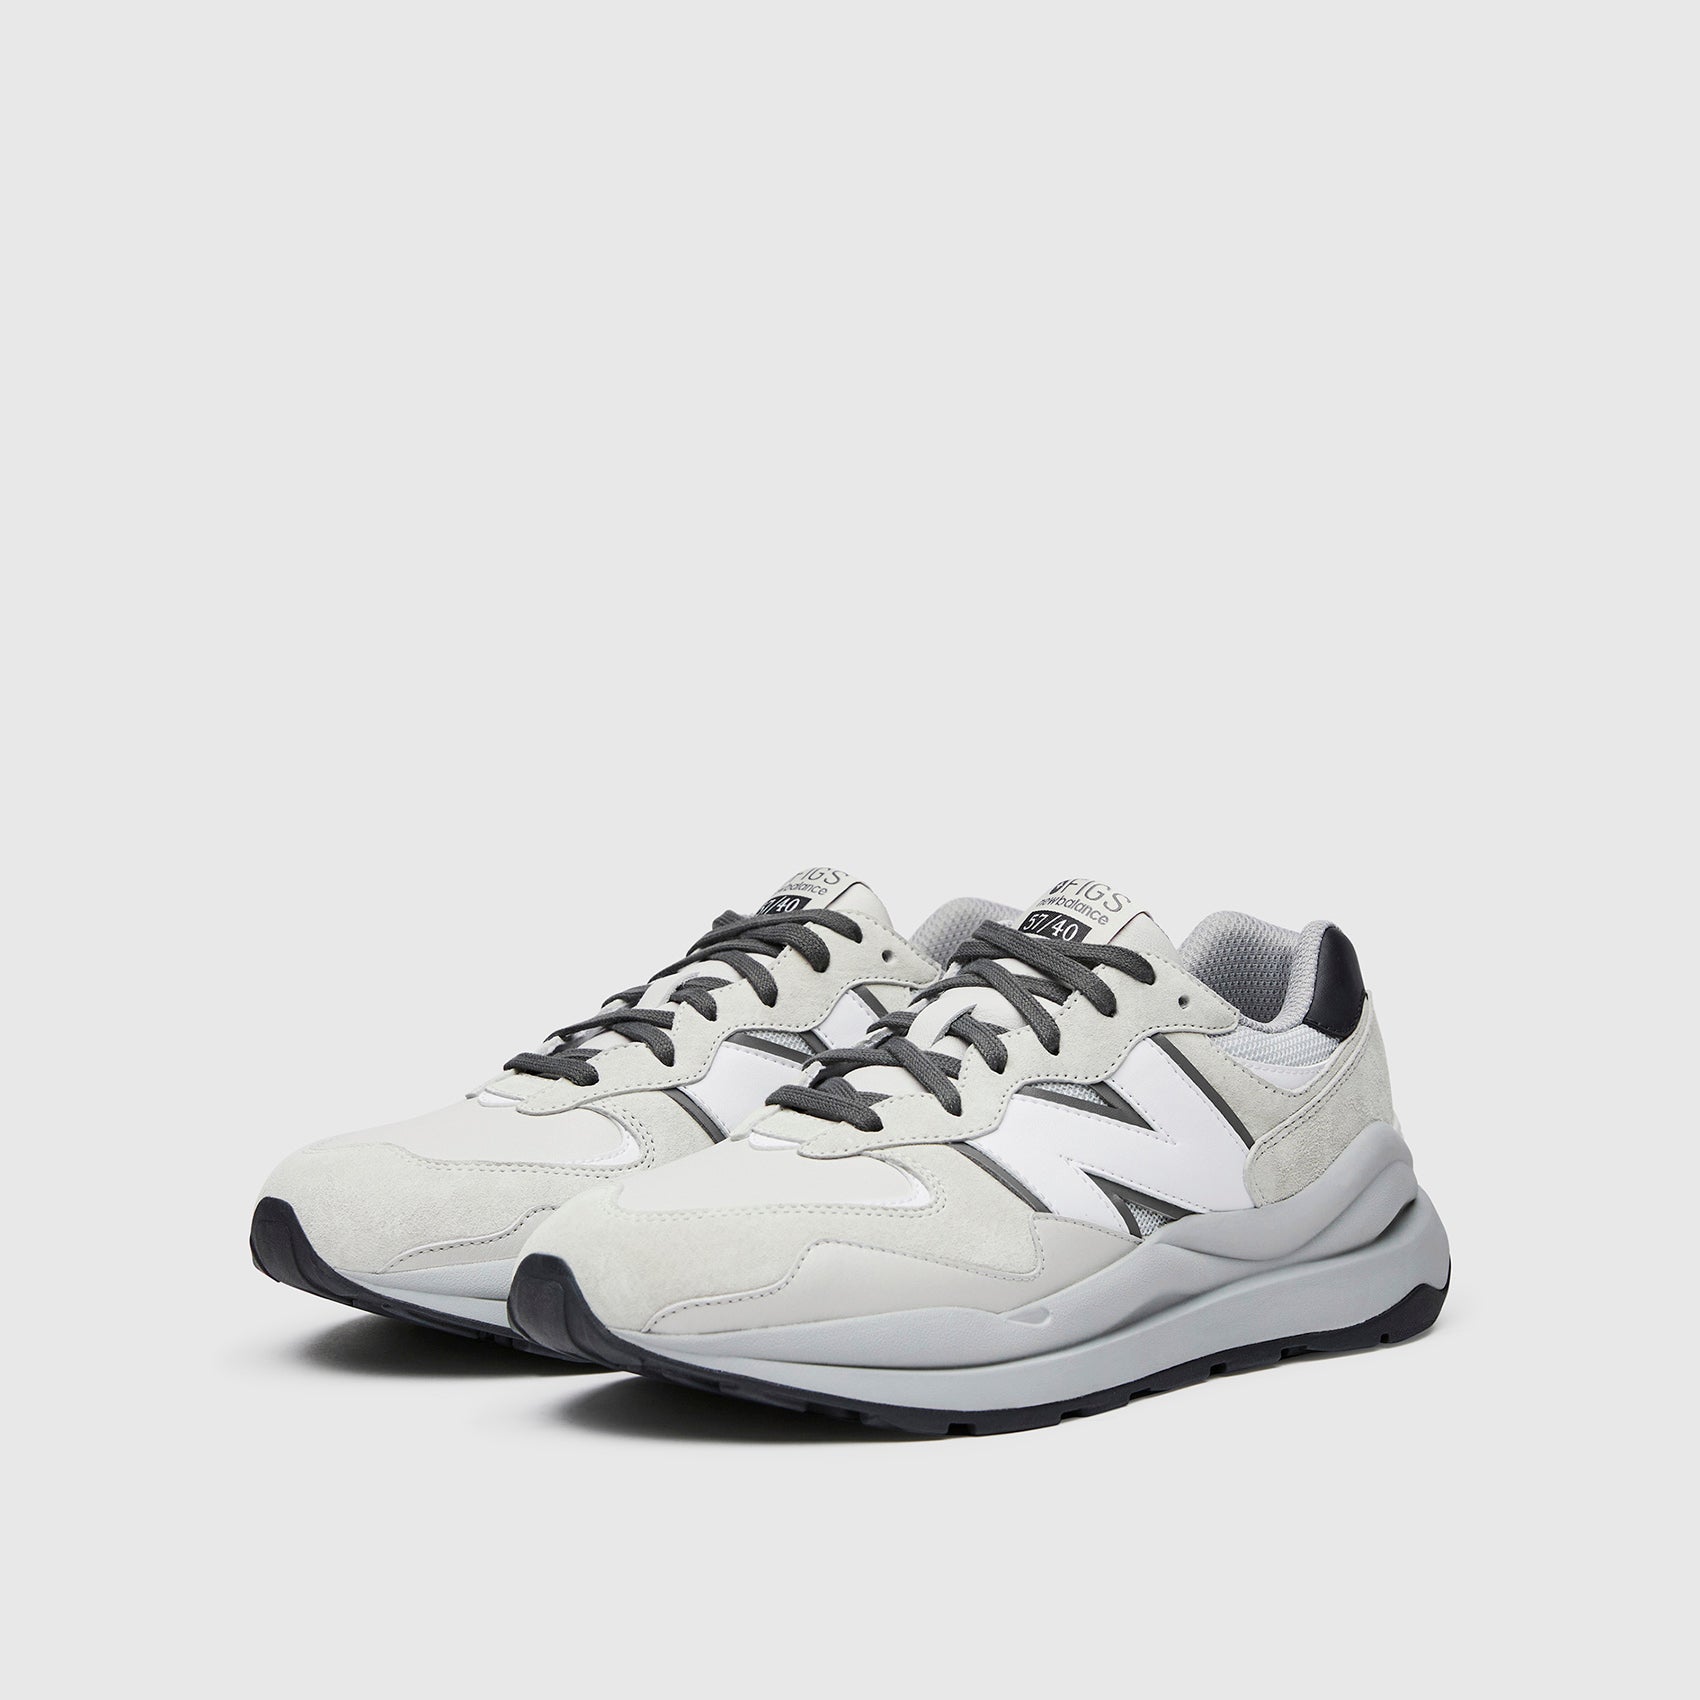 FIGS  New Balance 574 - Men's Shoes - Grey